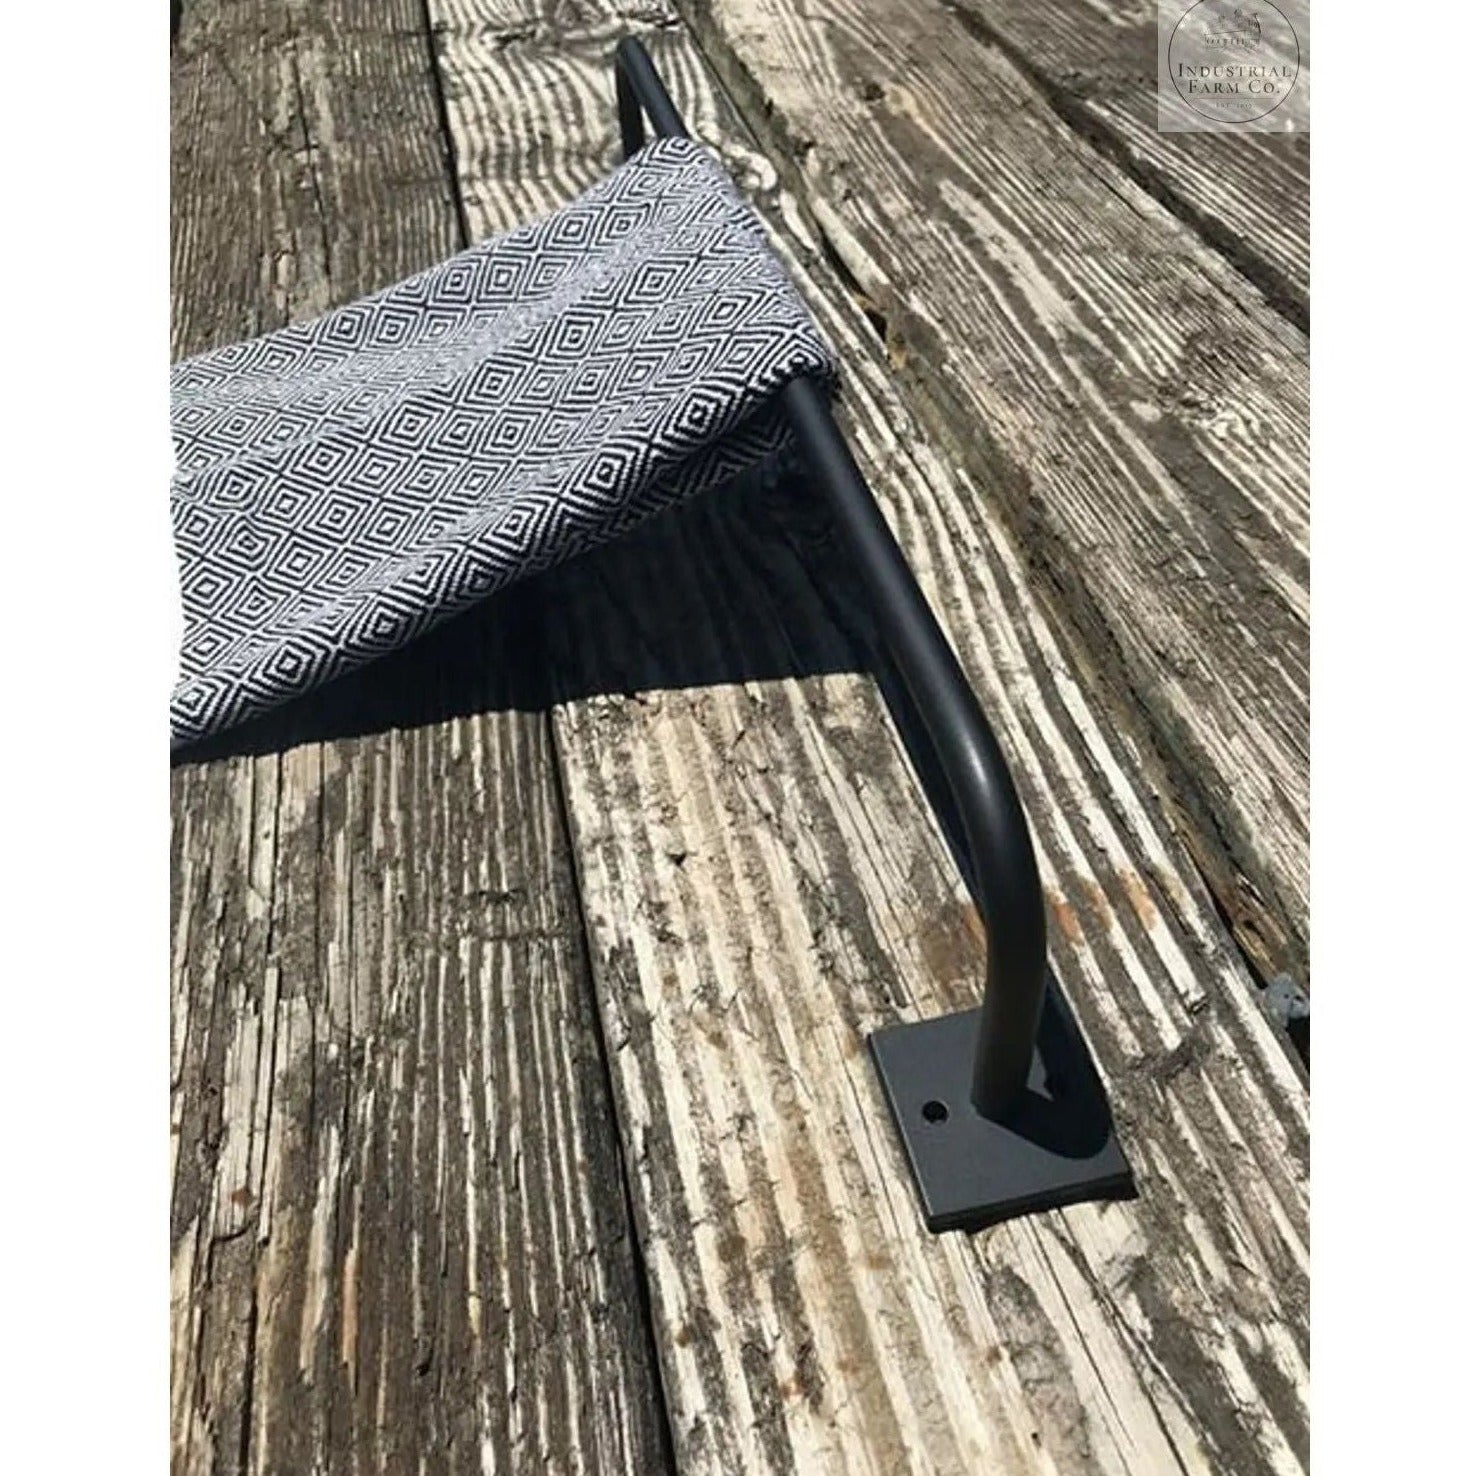 The Split Rock Towel Rack Towel Bar 12" Wall Mount Length Finish Clear Coat | Industrial Farm Co